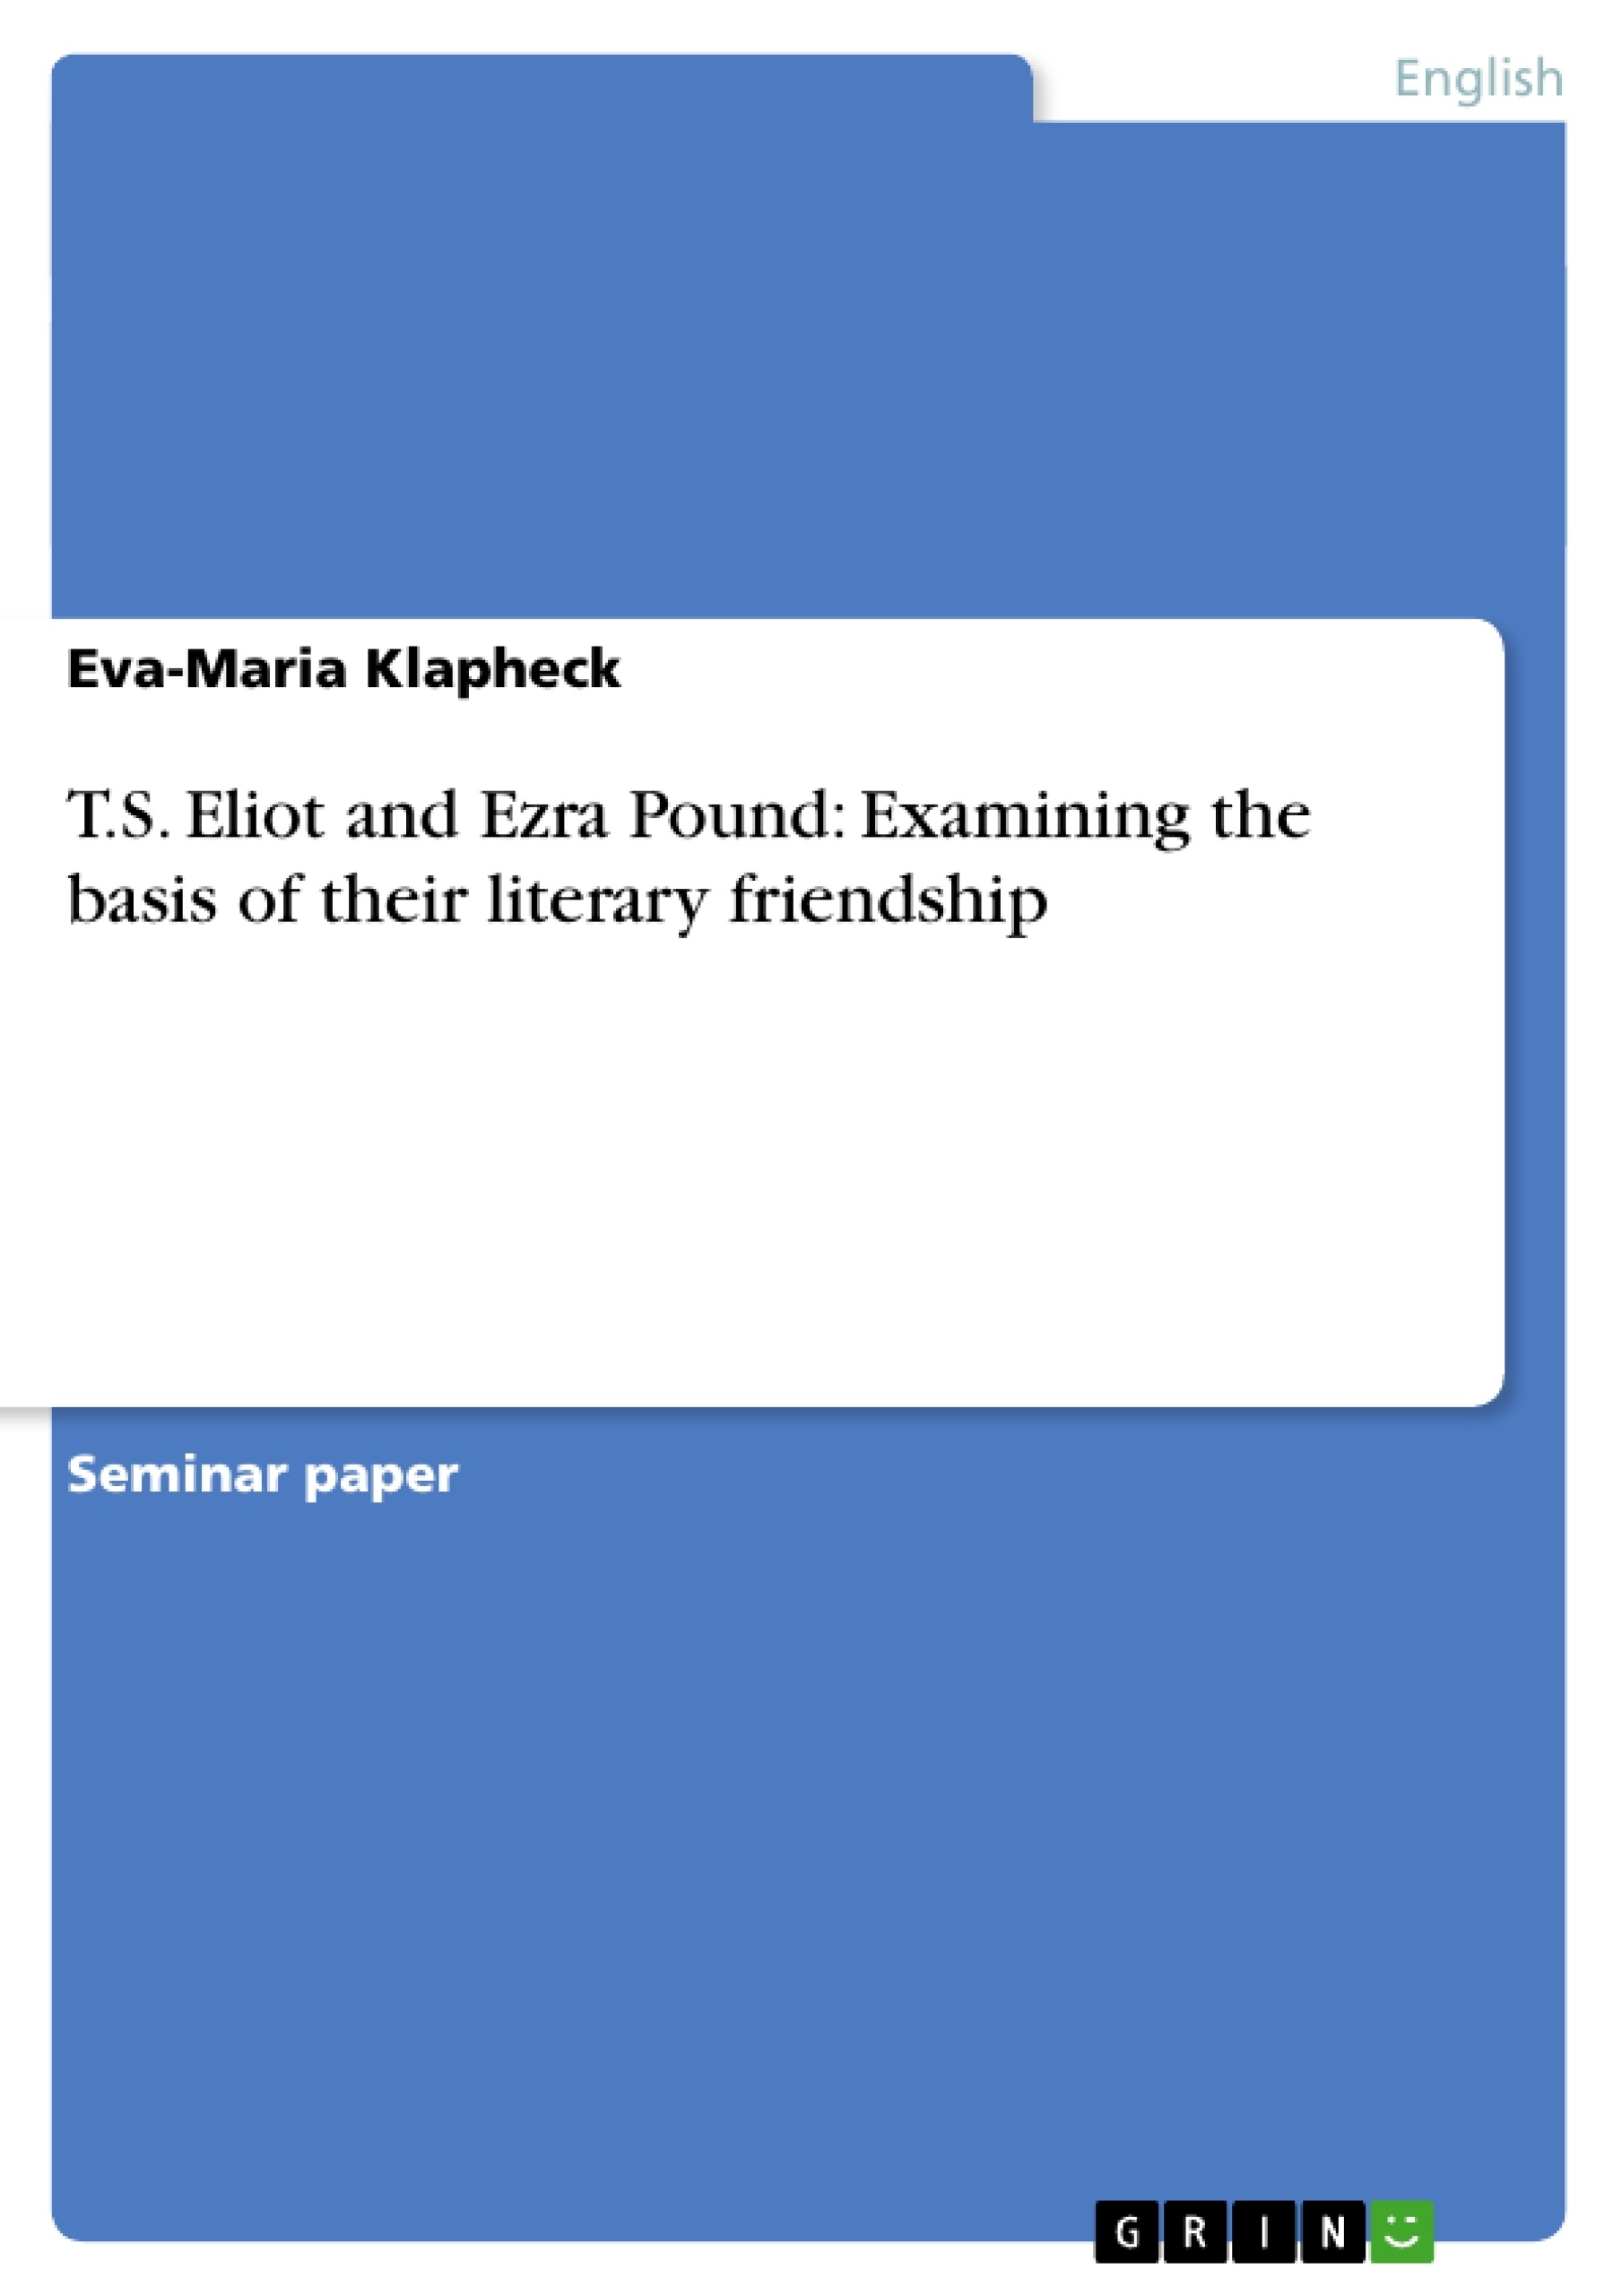 Titre: T.S. Eliot and Ezra Pound: Examining the basis of their literary friendship